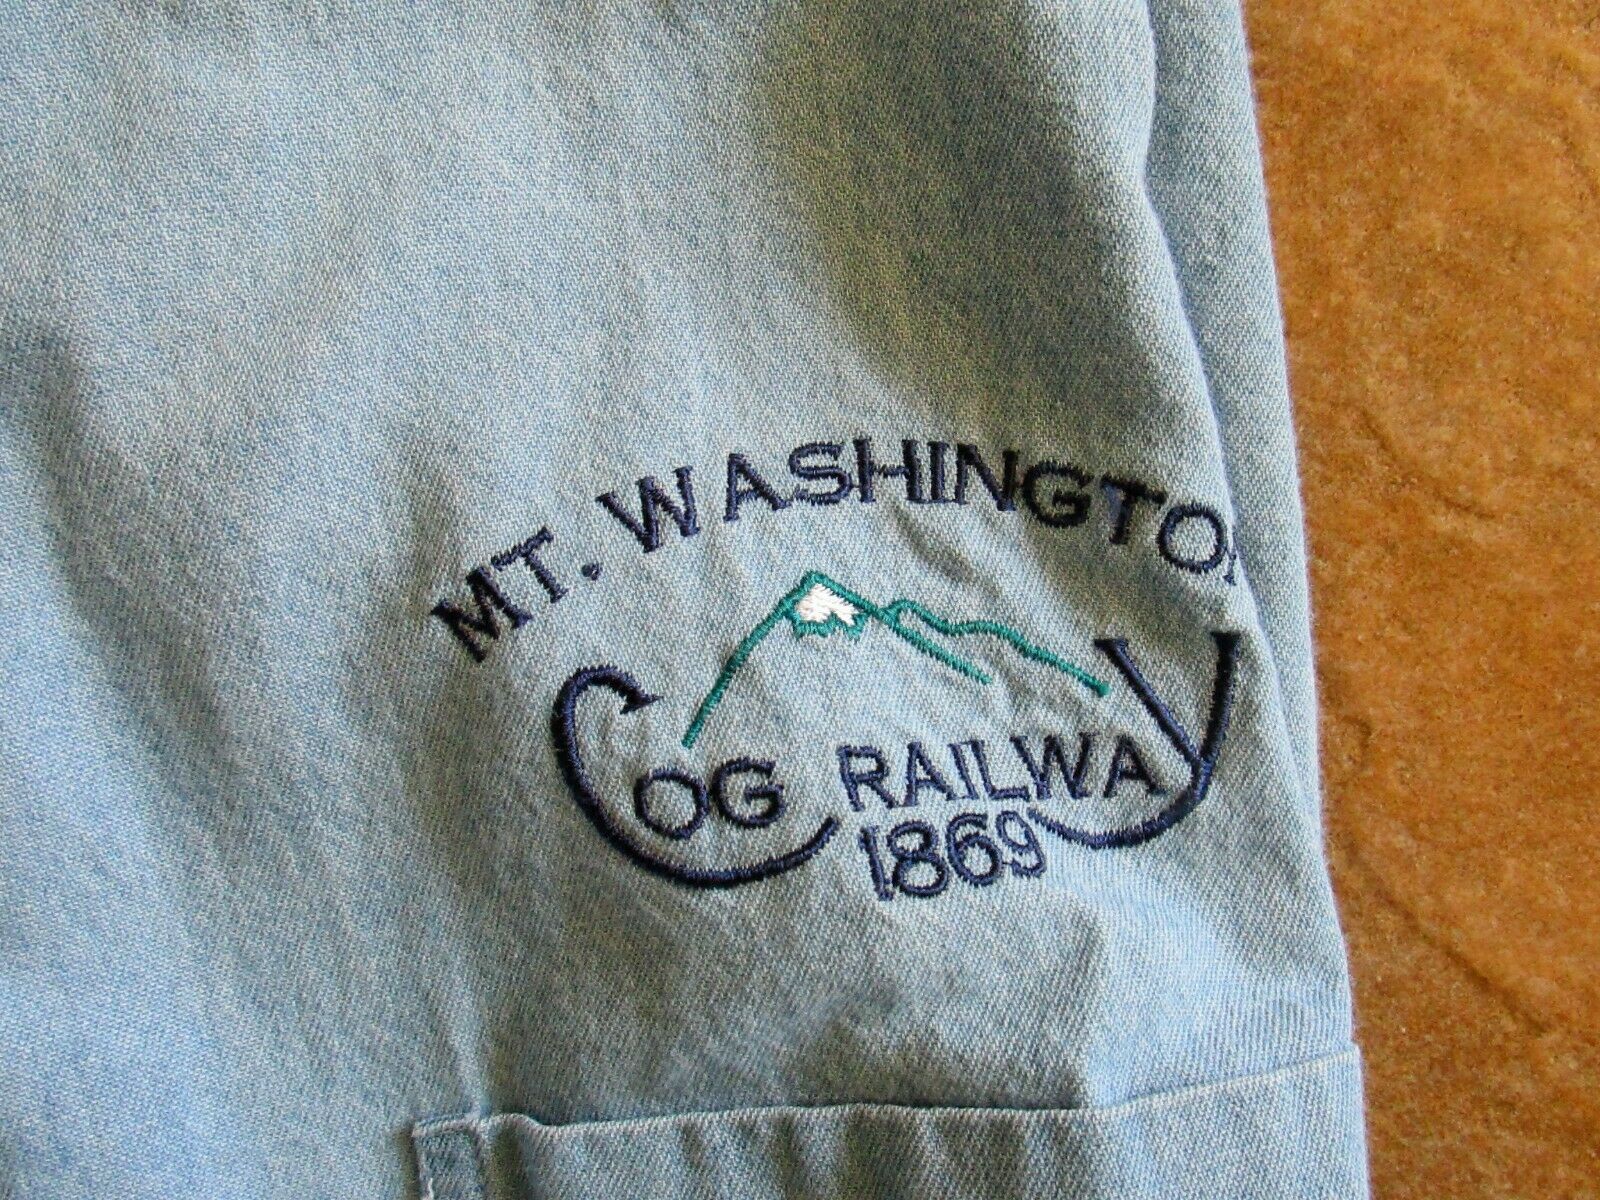 Mt Washington ,n.h. Cog Railway Denim Shirt Size Xl Short Sleeve 100% Cotton